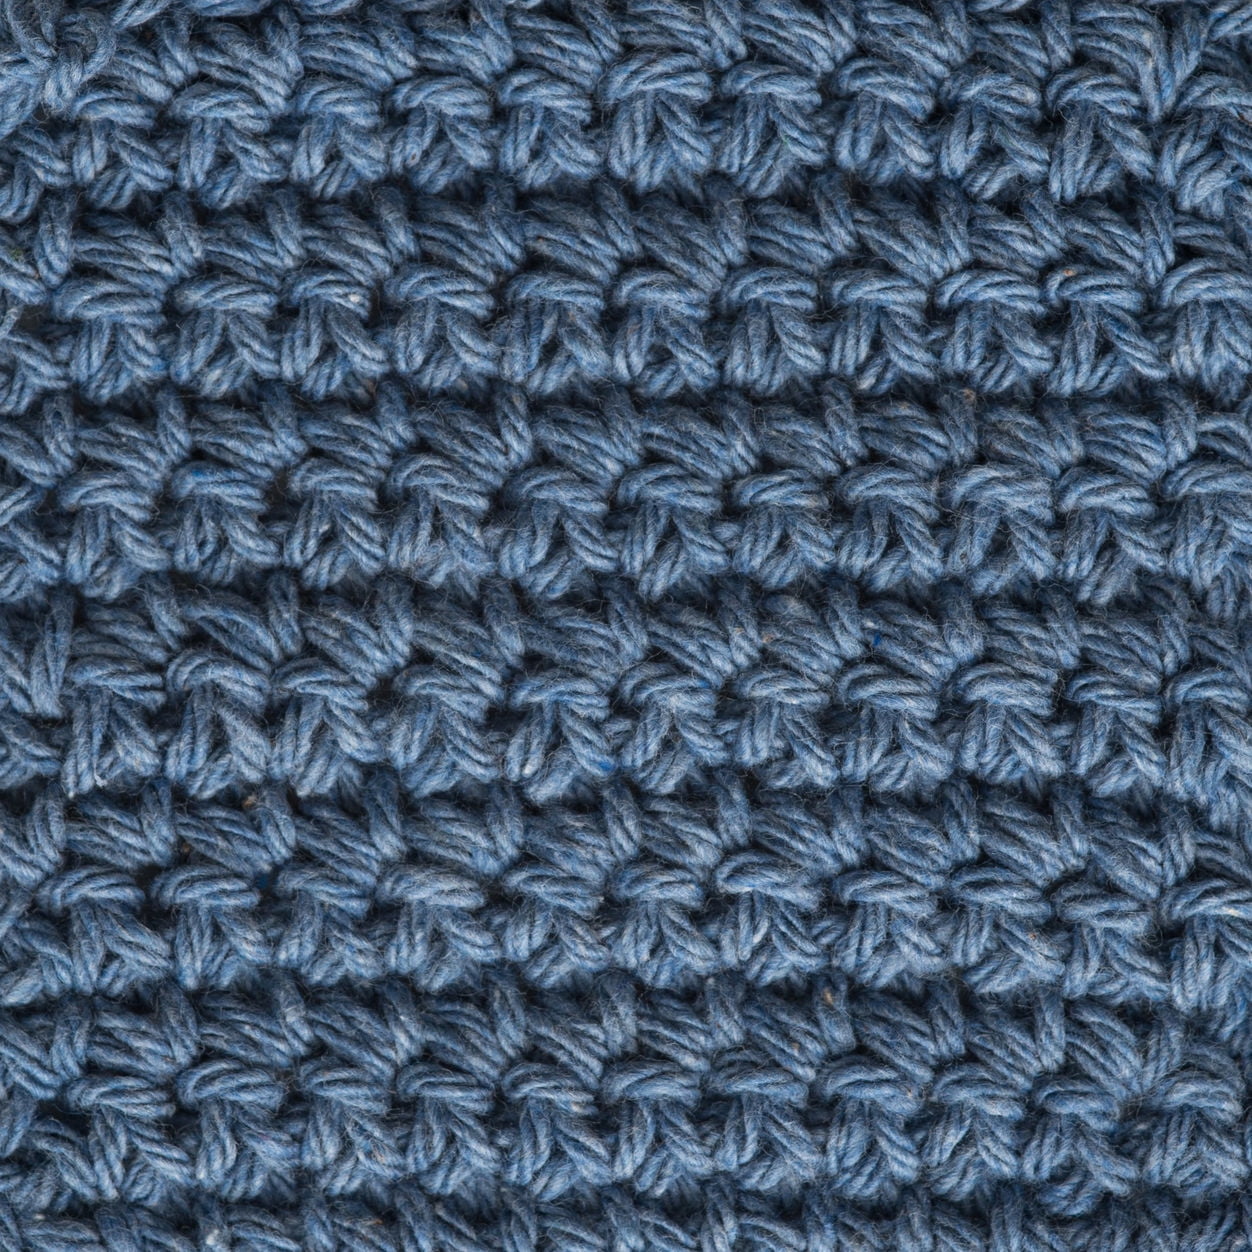 EXCEART 3pcs Acrylic Yarn Cotton Yarn for Yarn for Knitting Super Bulky  Yarn Knitting Kit Crochet Yarn Sugar and Cream Cotton Yarn White Yarn  Scrubby